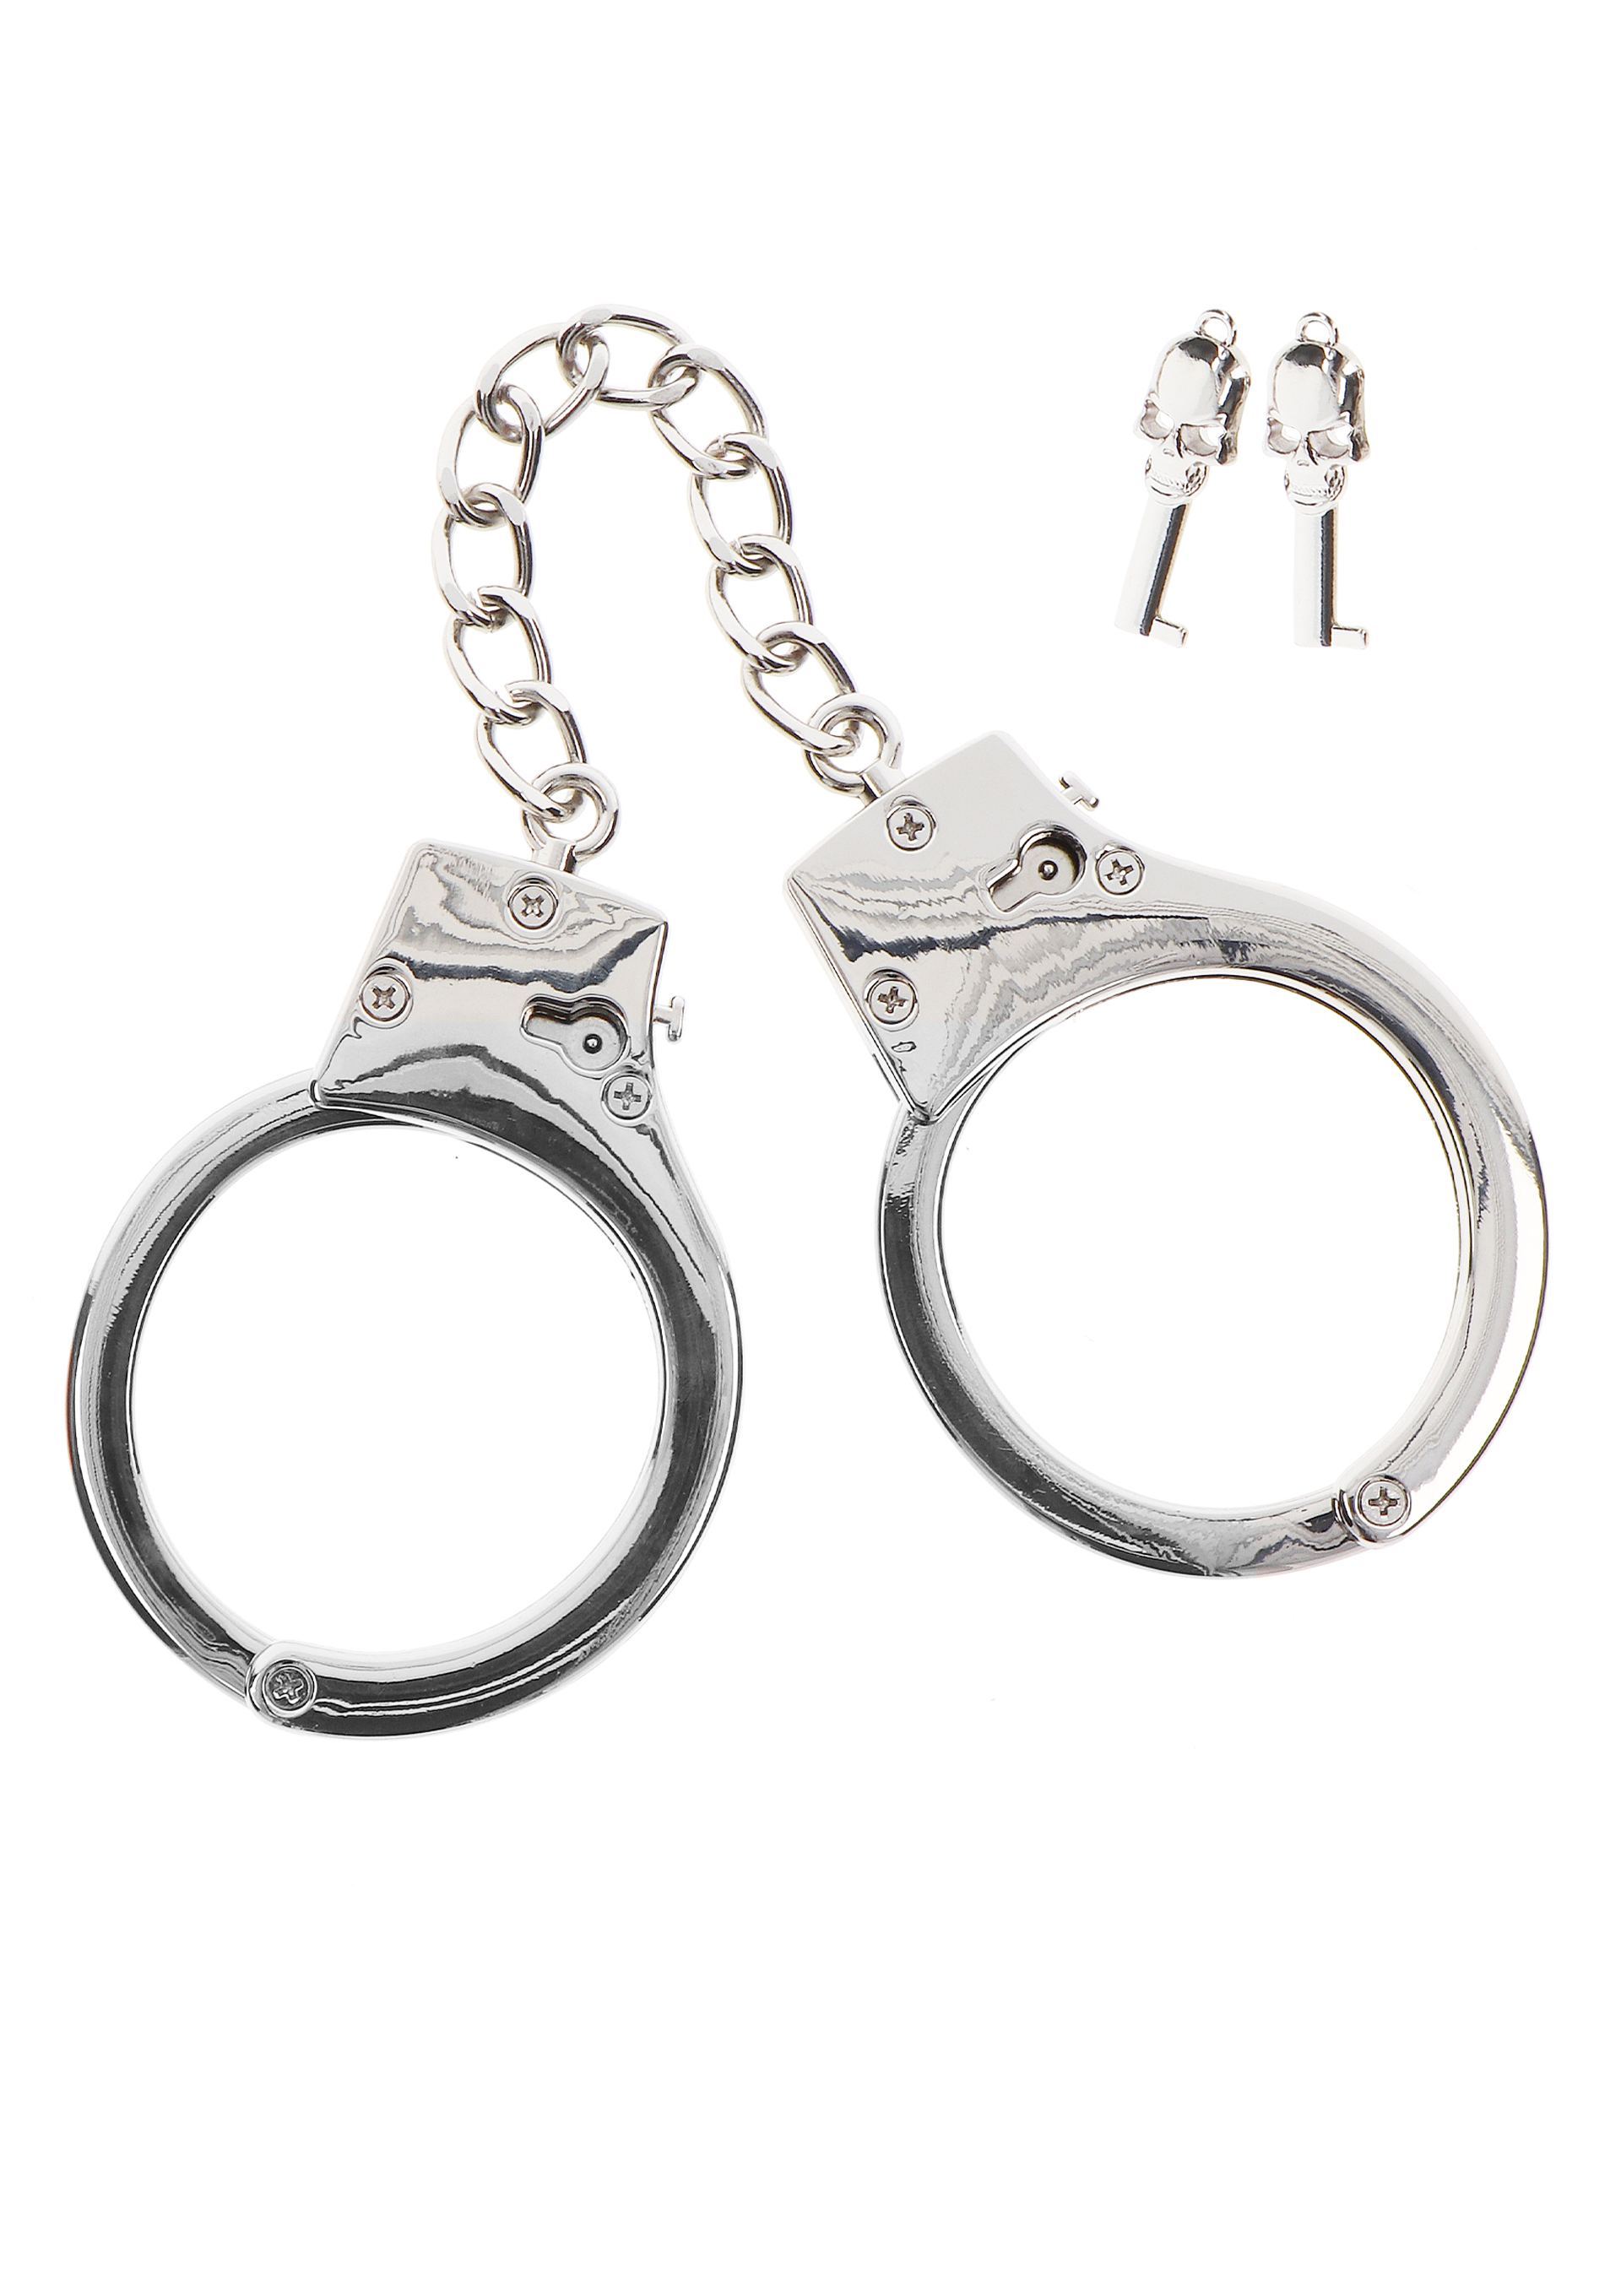 Taboom - Taboom Silver Plated BDSM Handcuffs